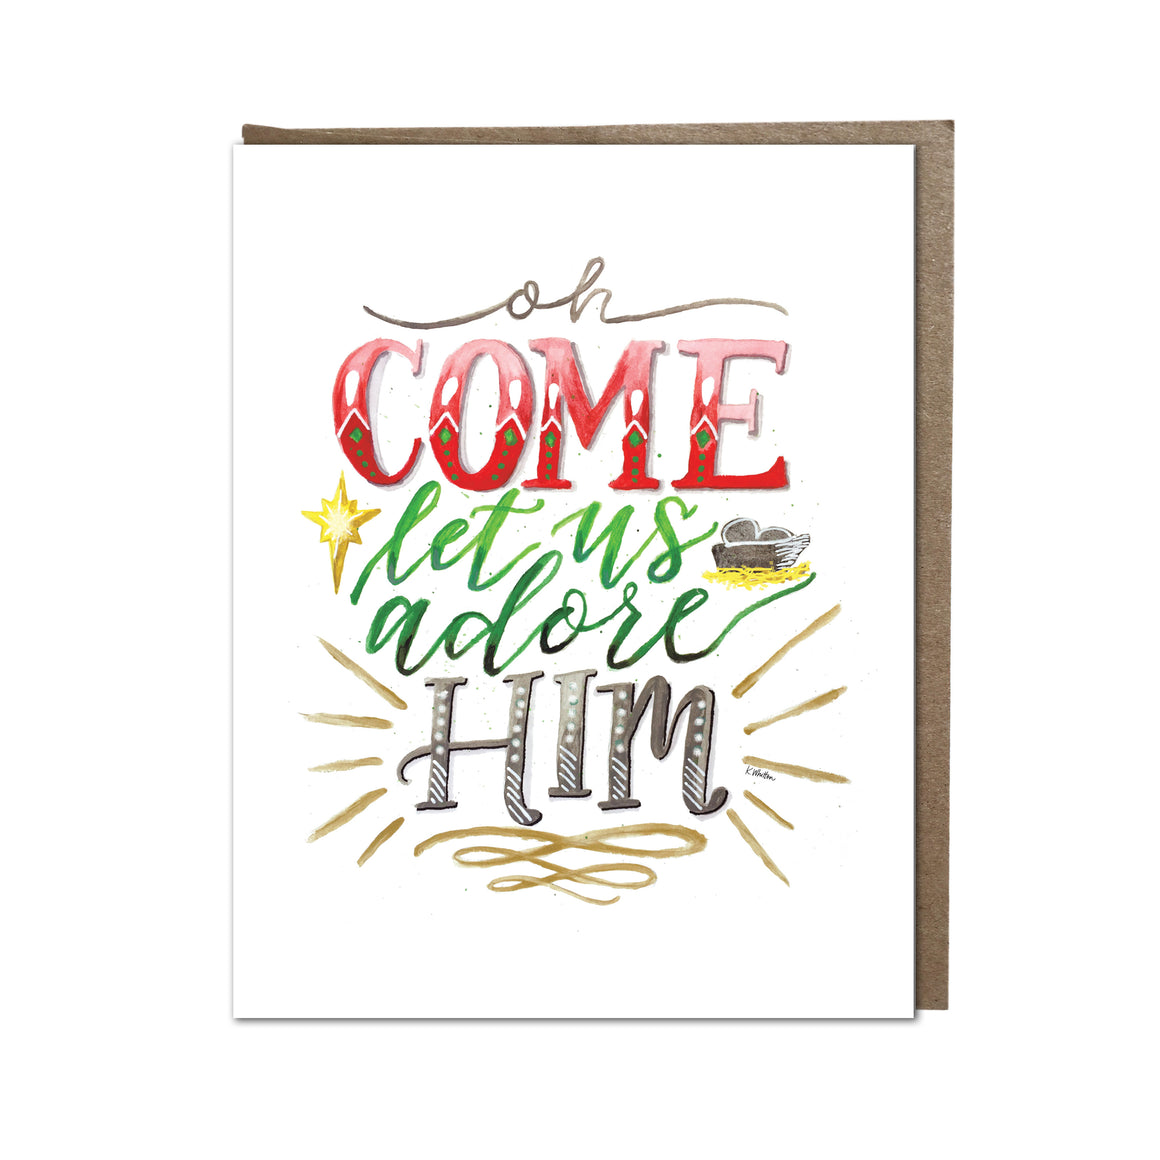 "O Come Let Us Adore Him" card